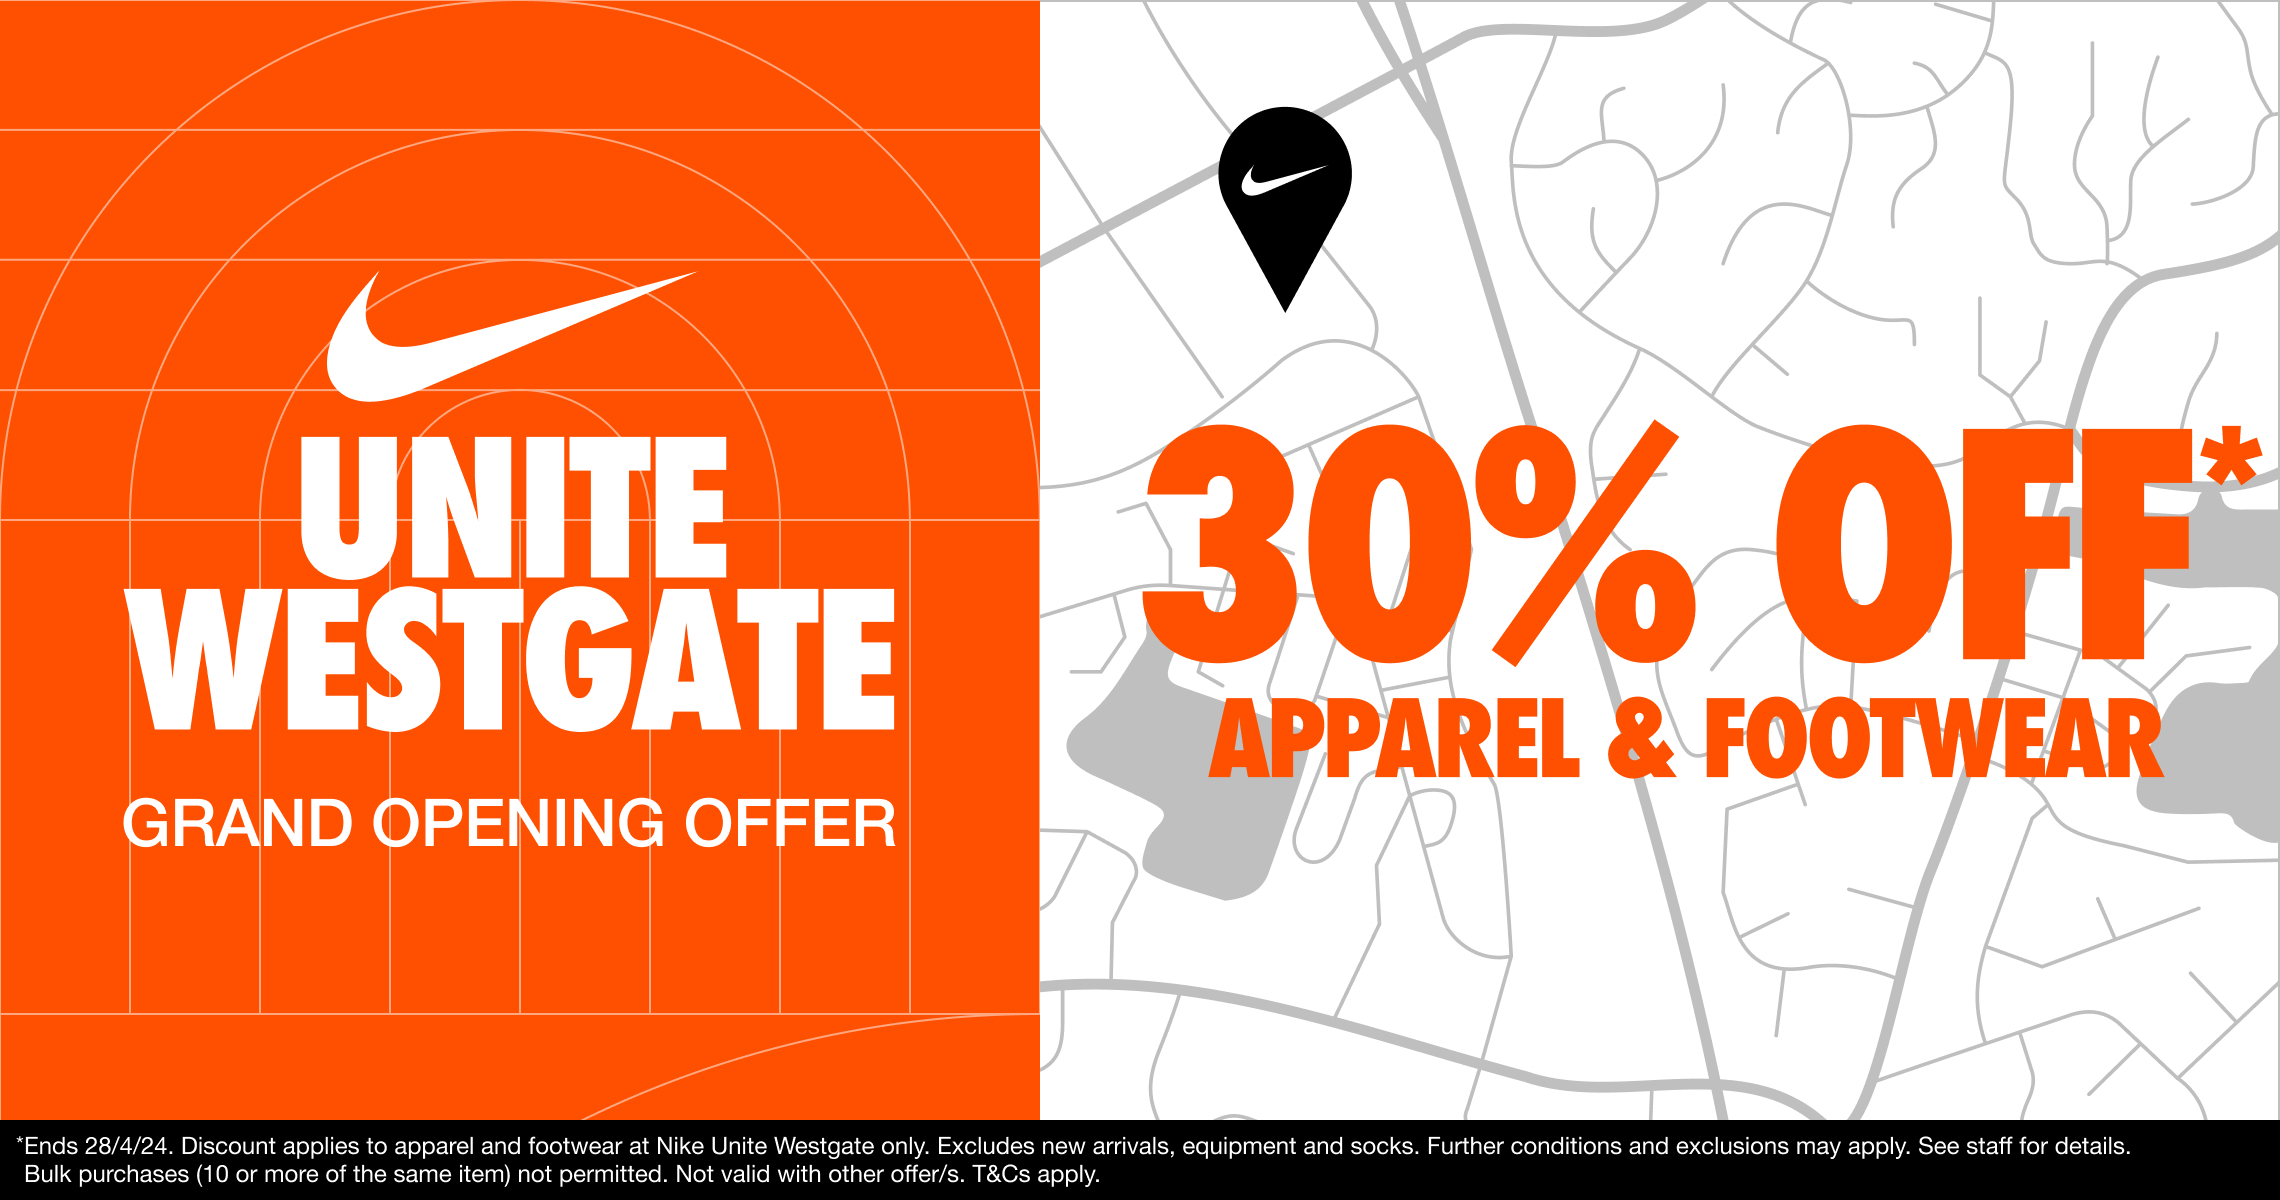 Nike Unite Grand Opening Offer!